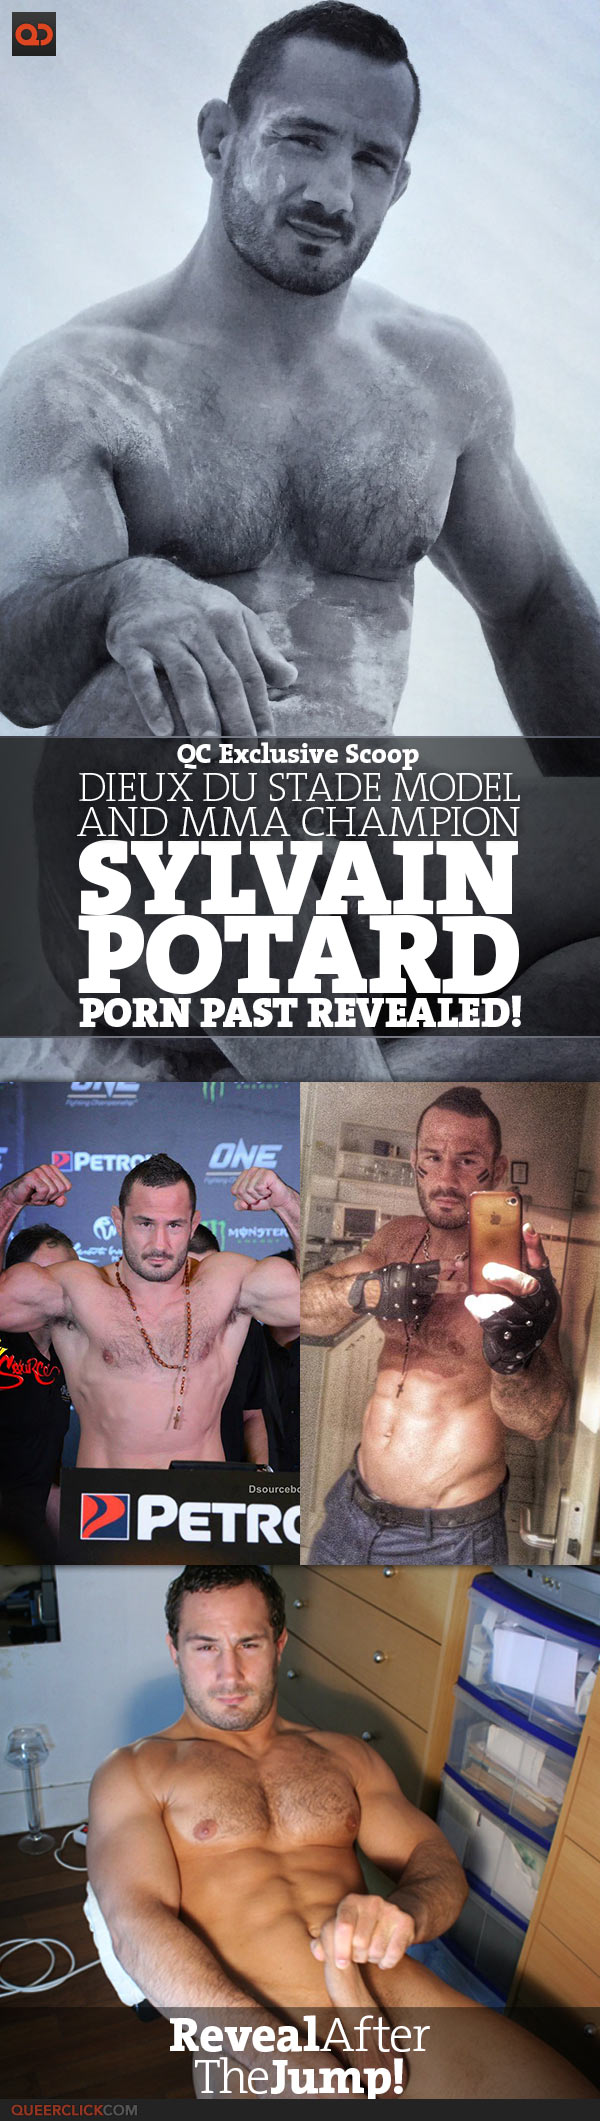 QC Exclusive Scoop Dieux Du Stade Model And MMA Champion Sylvain Potard Porn Past Revealed! image